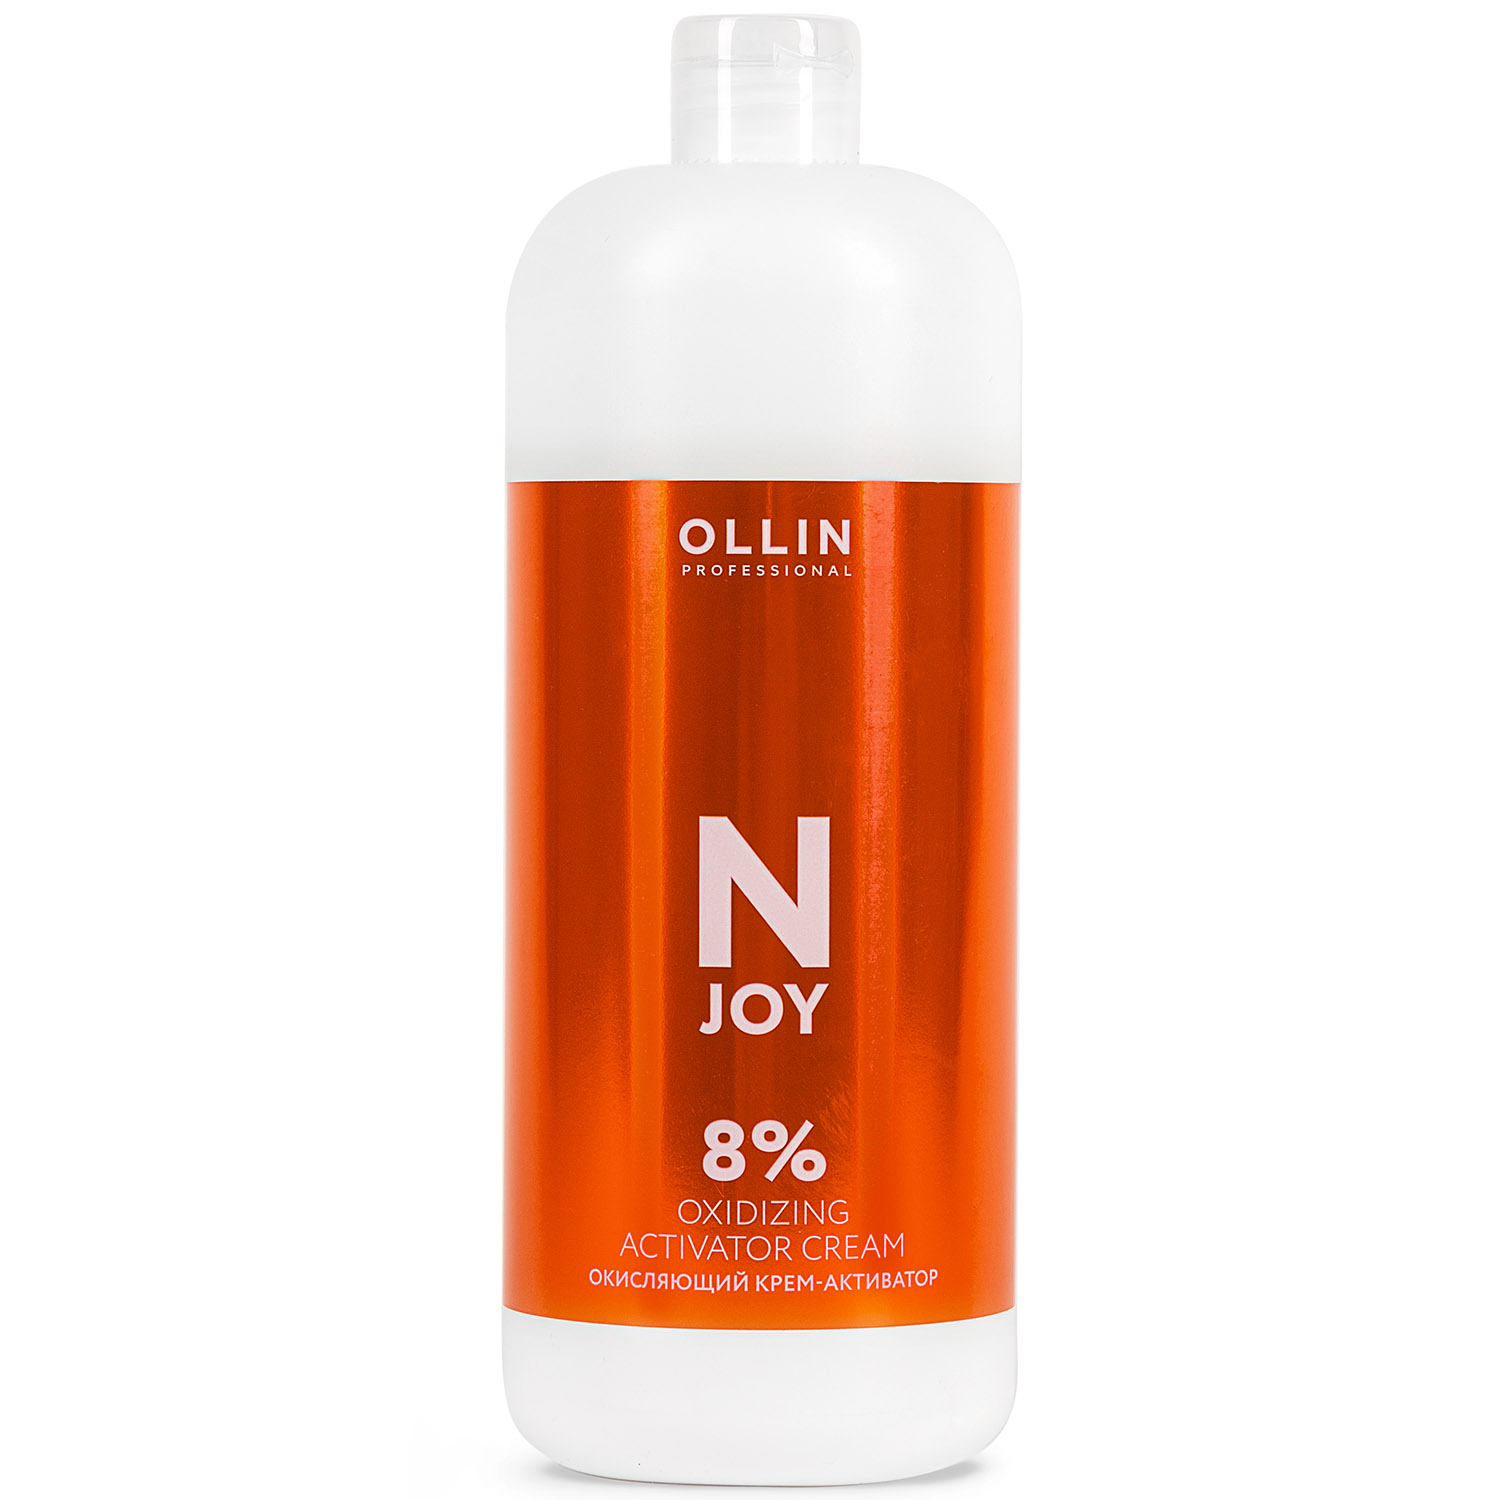 Ollin Professional Окисляющий крем-активатор 8%, 1000 мл (Ollin Professional, N-Joy) окисляющий крем активатор для краски n joy 100мл крем активатор 4%